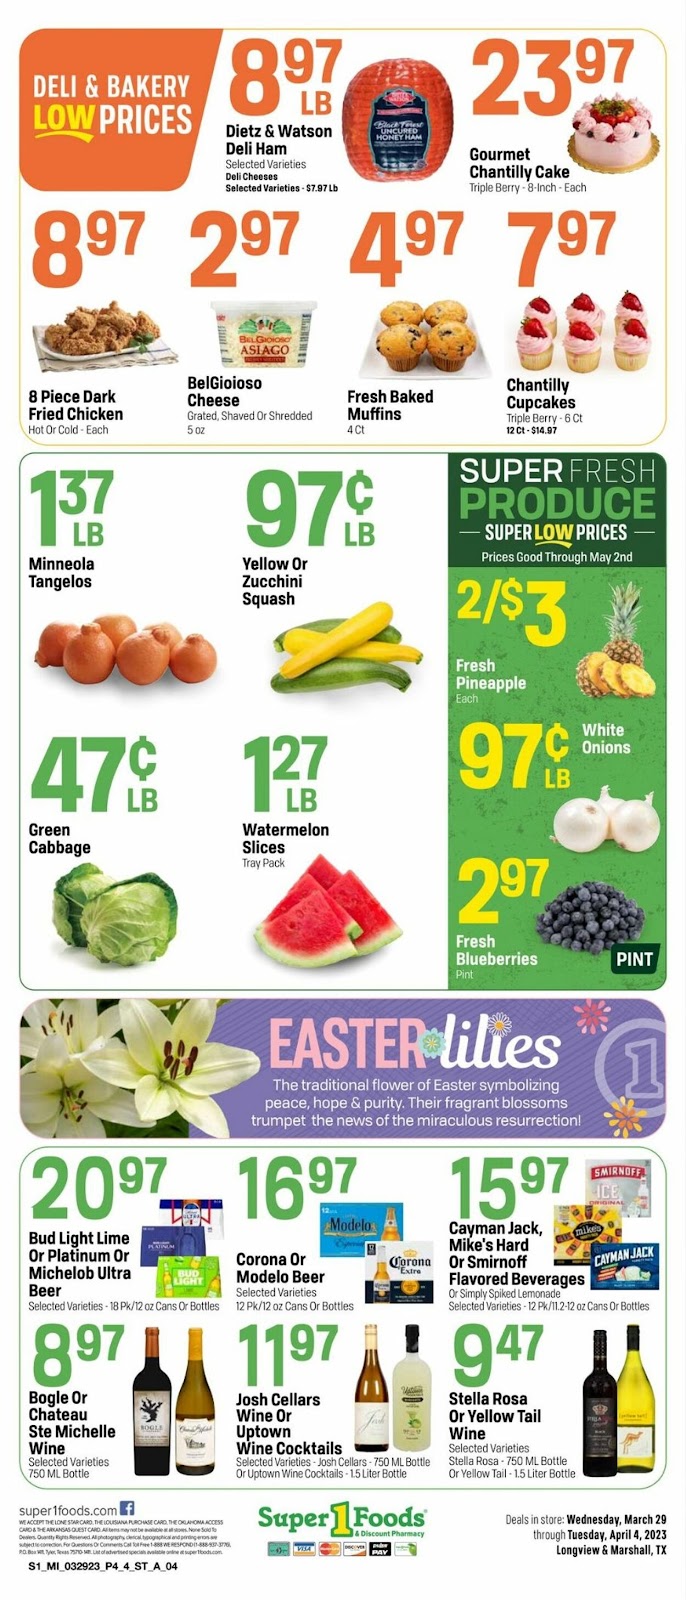 Super 1 Foods Weekly Ad - 4